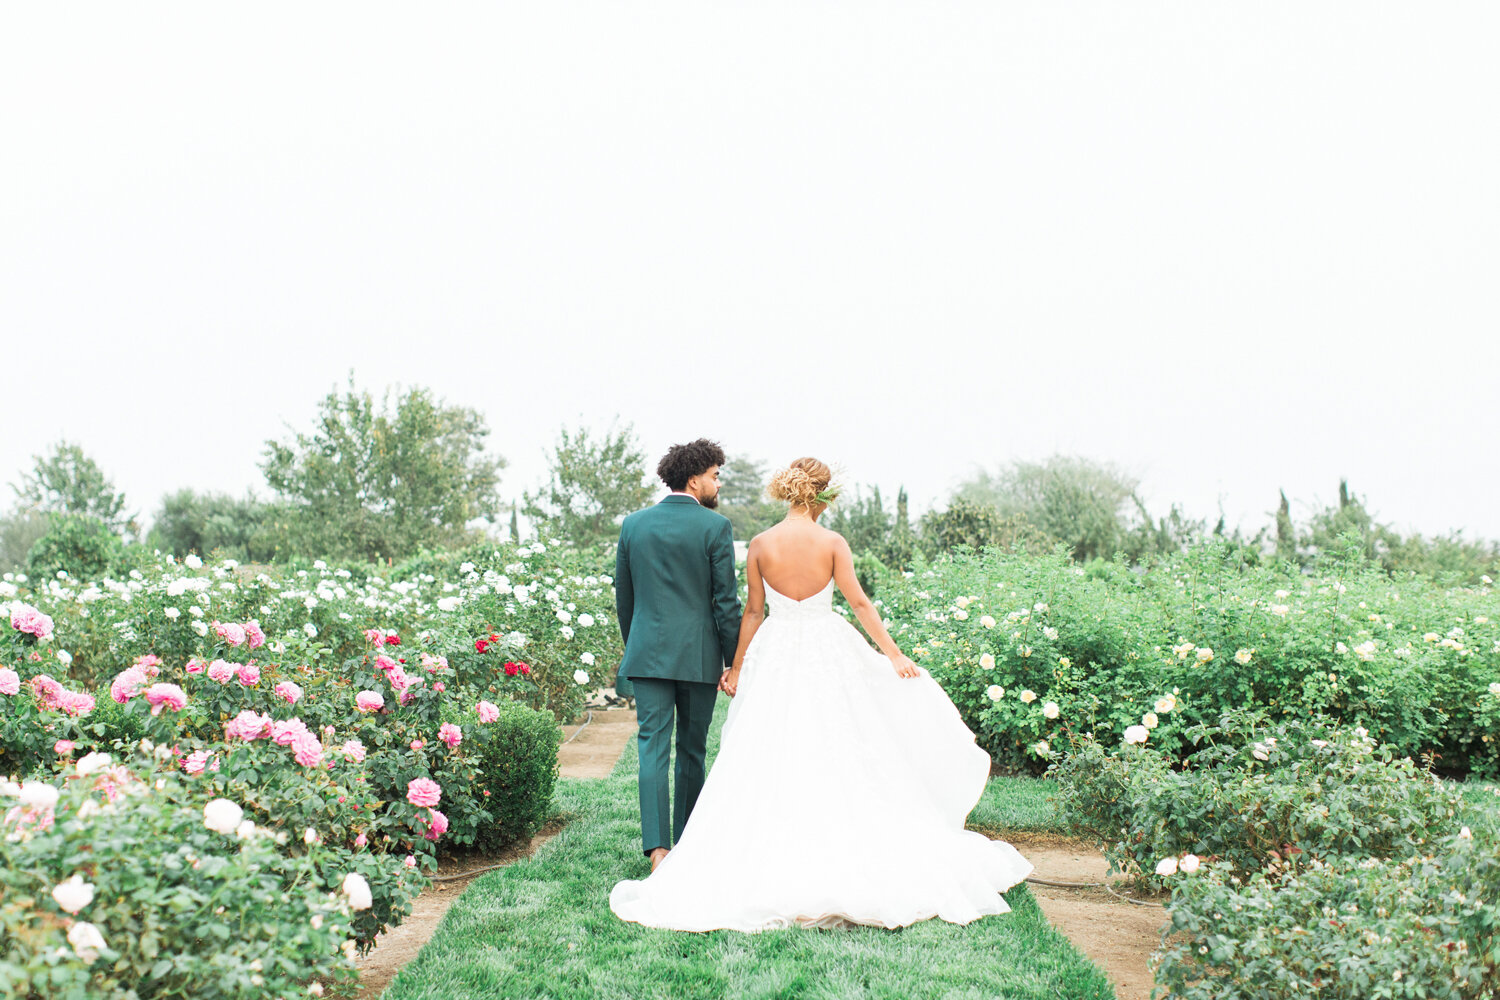 wisteria-photography.com | Wisteria Photography | Intimate Rose Garden Wedding | Santa Ynez | Featured on Green Wedding Shoes | Southern California Photographer-44.jpg